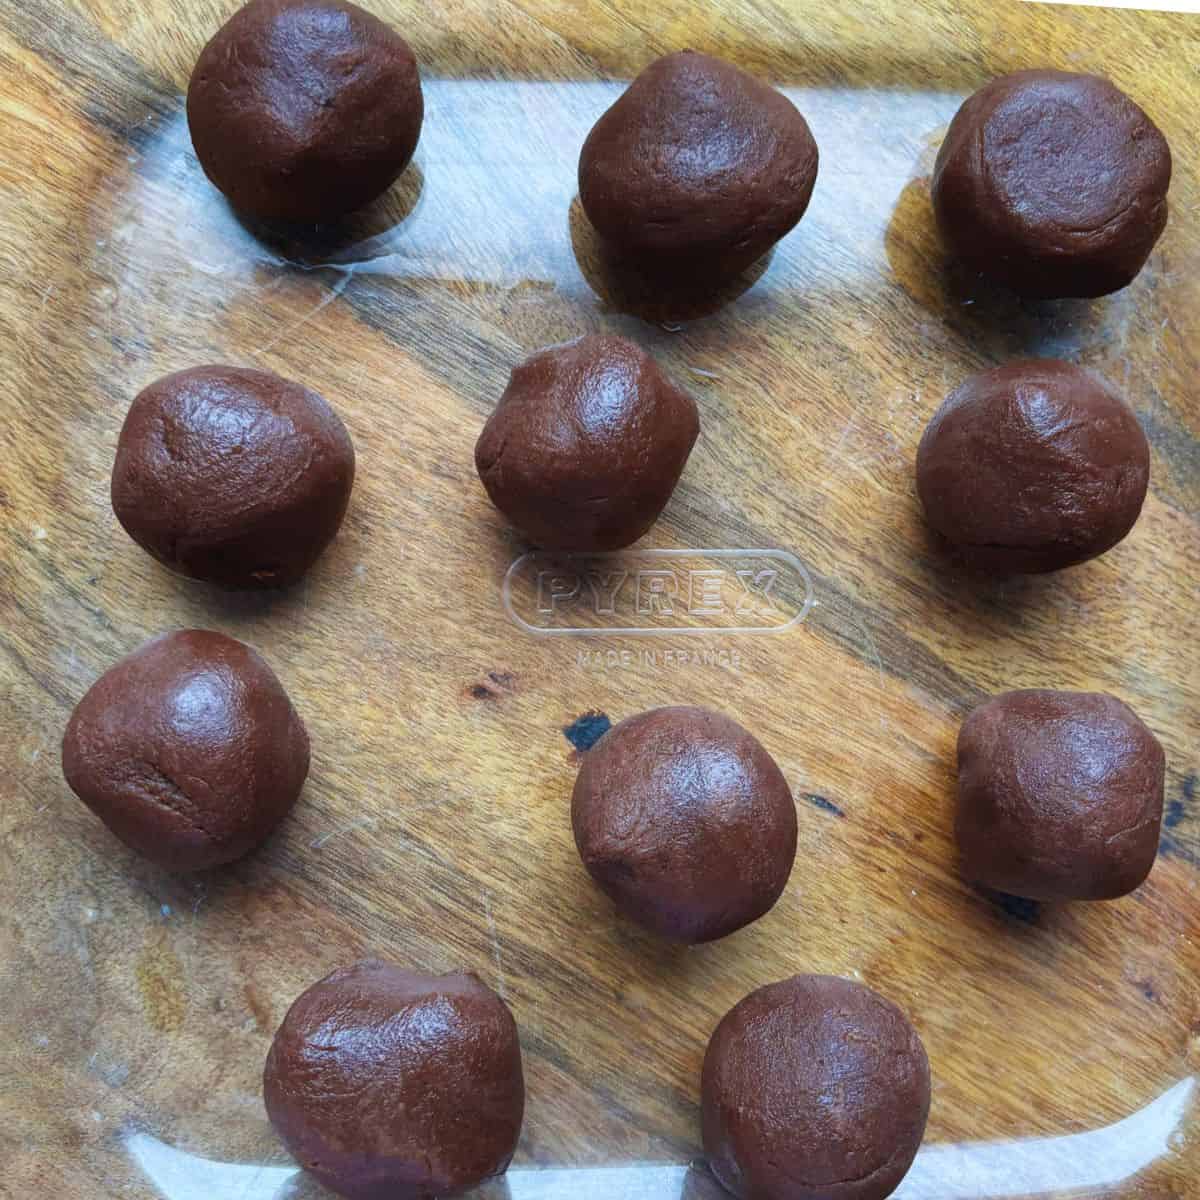 Chocolate fudge balls in a glass dish.